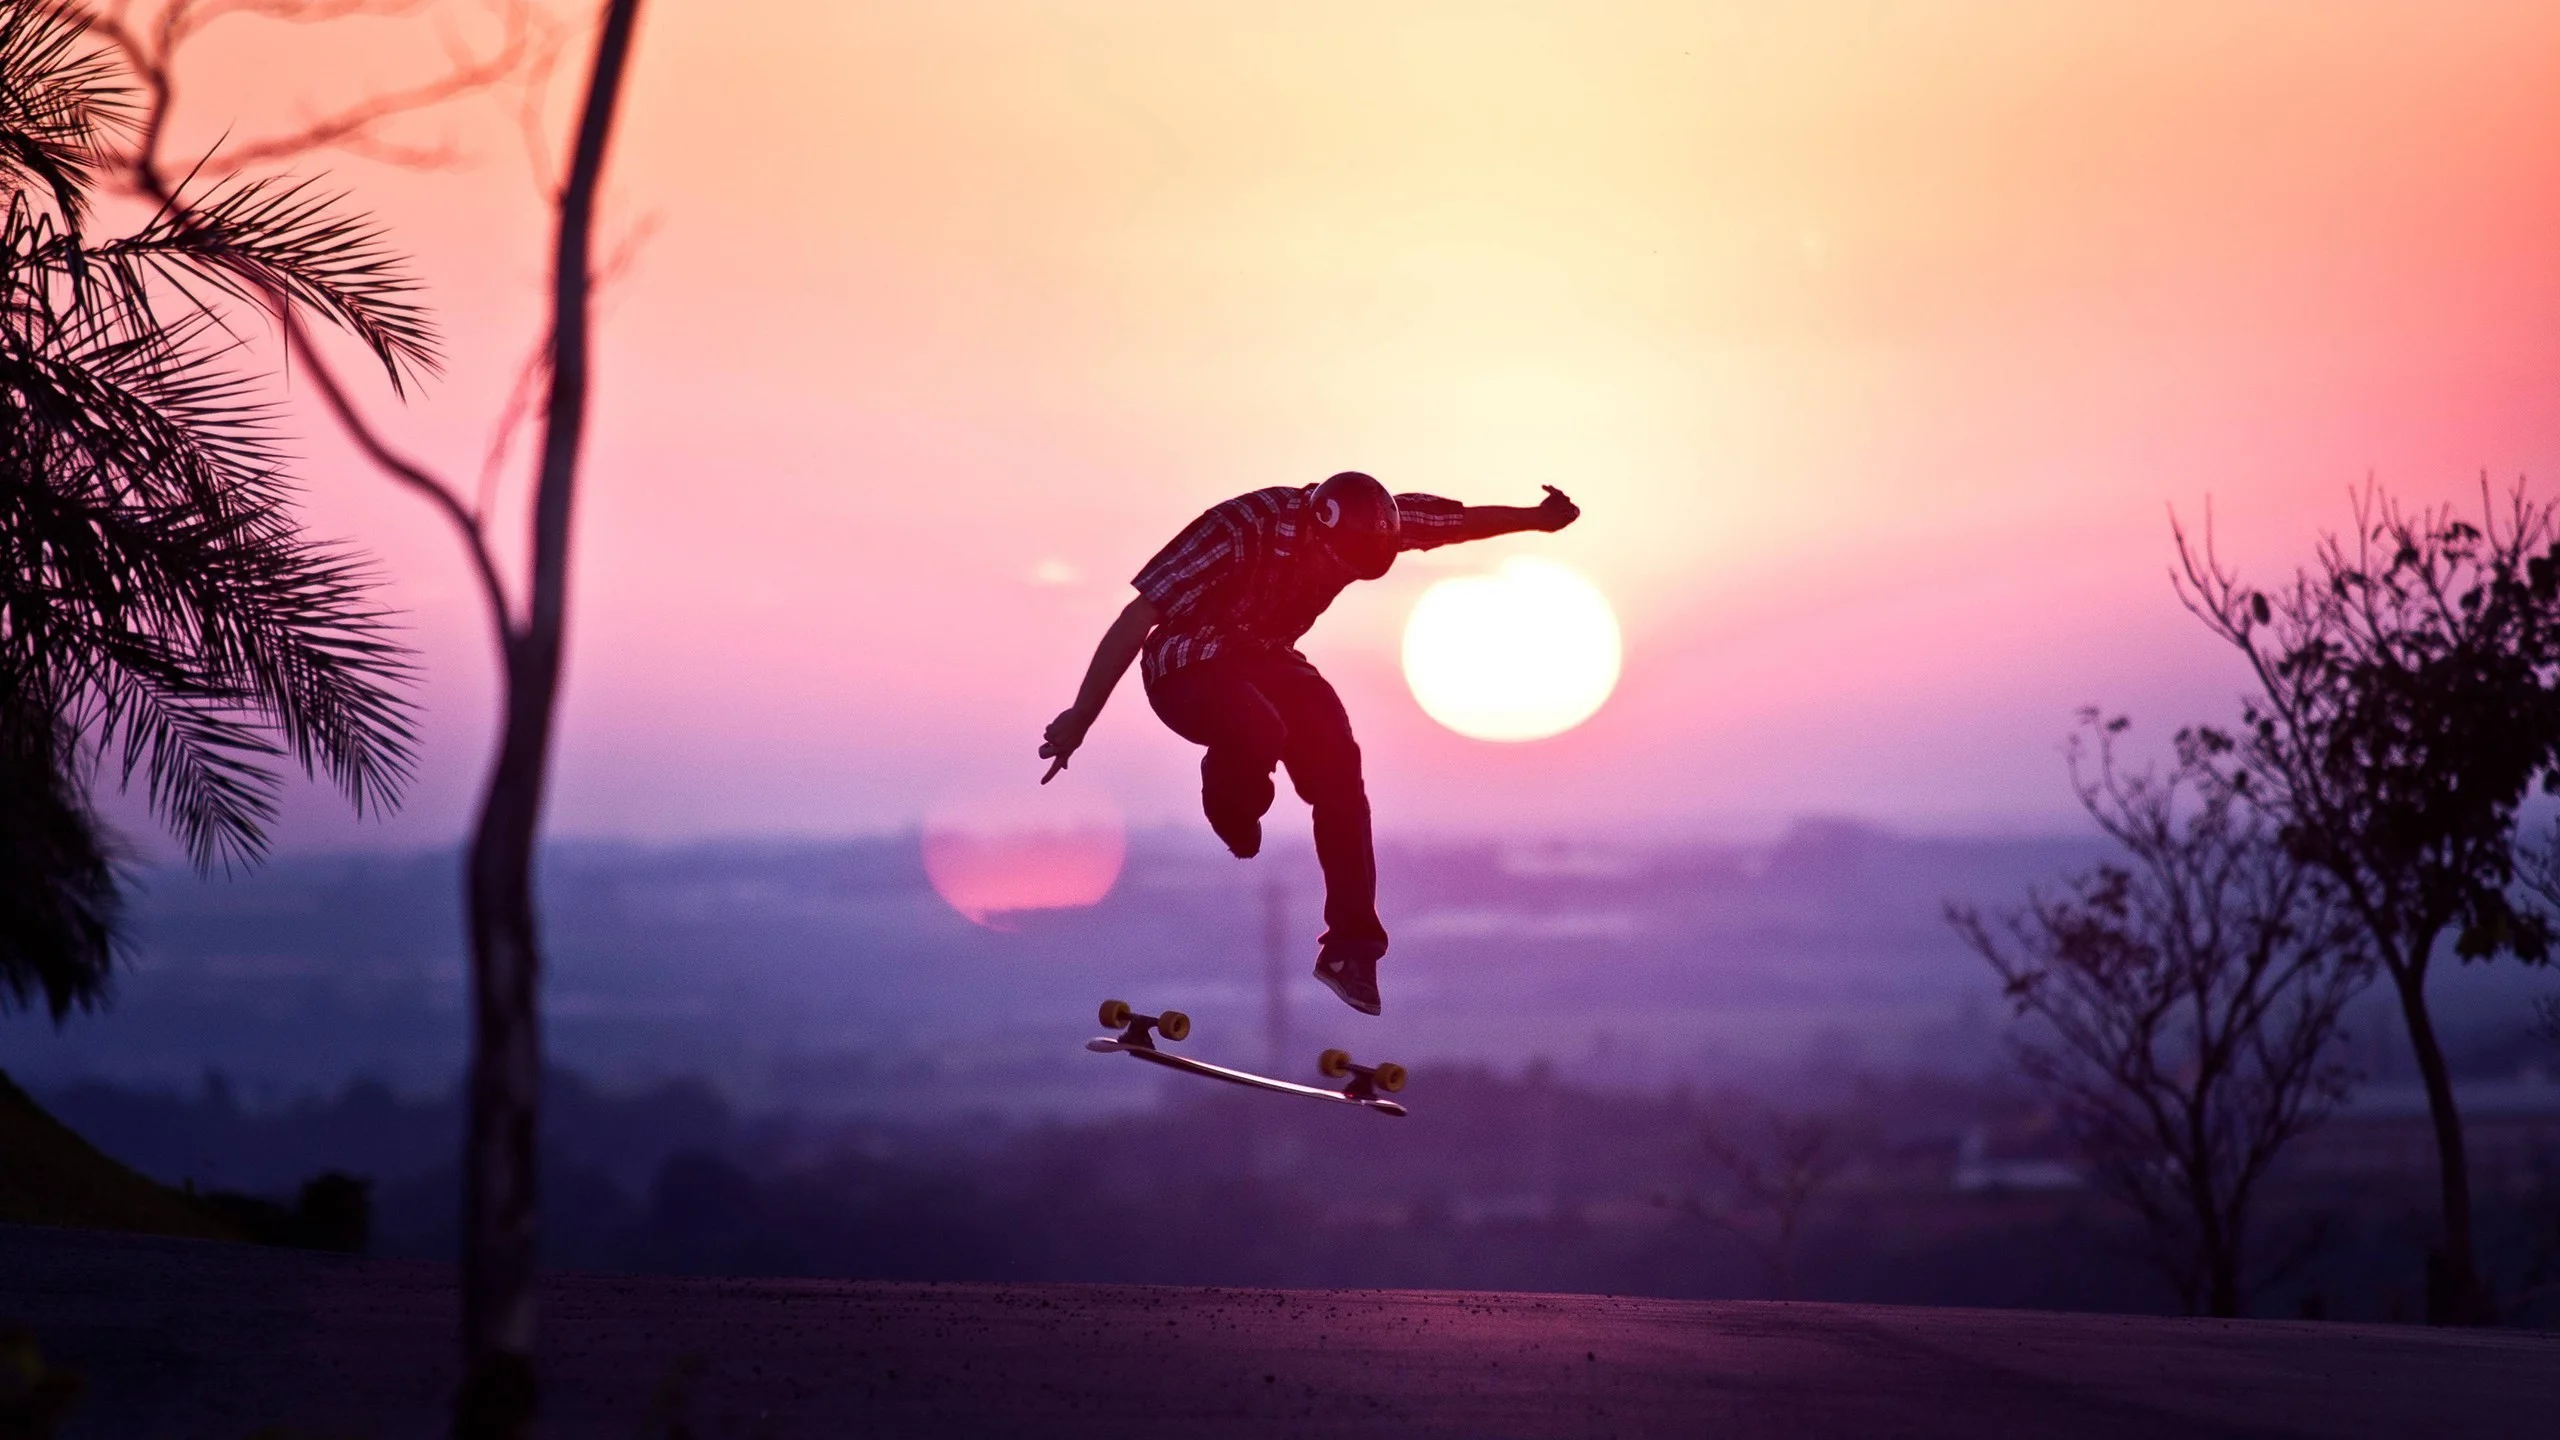 Cool skateboarding wallpapers – danasrhp.top